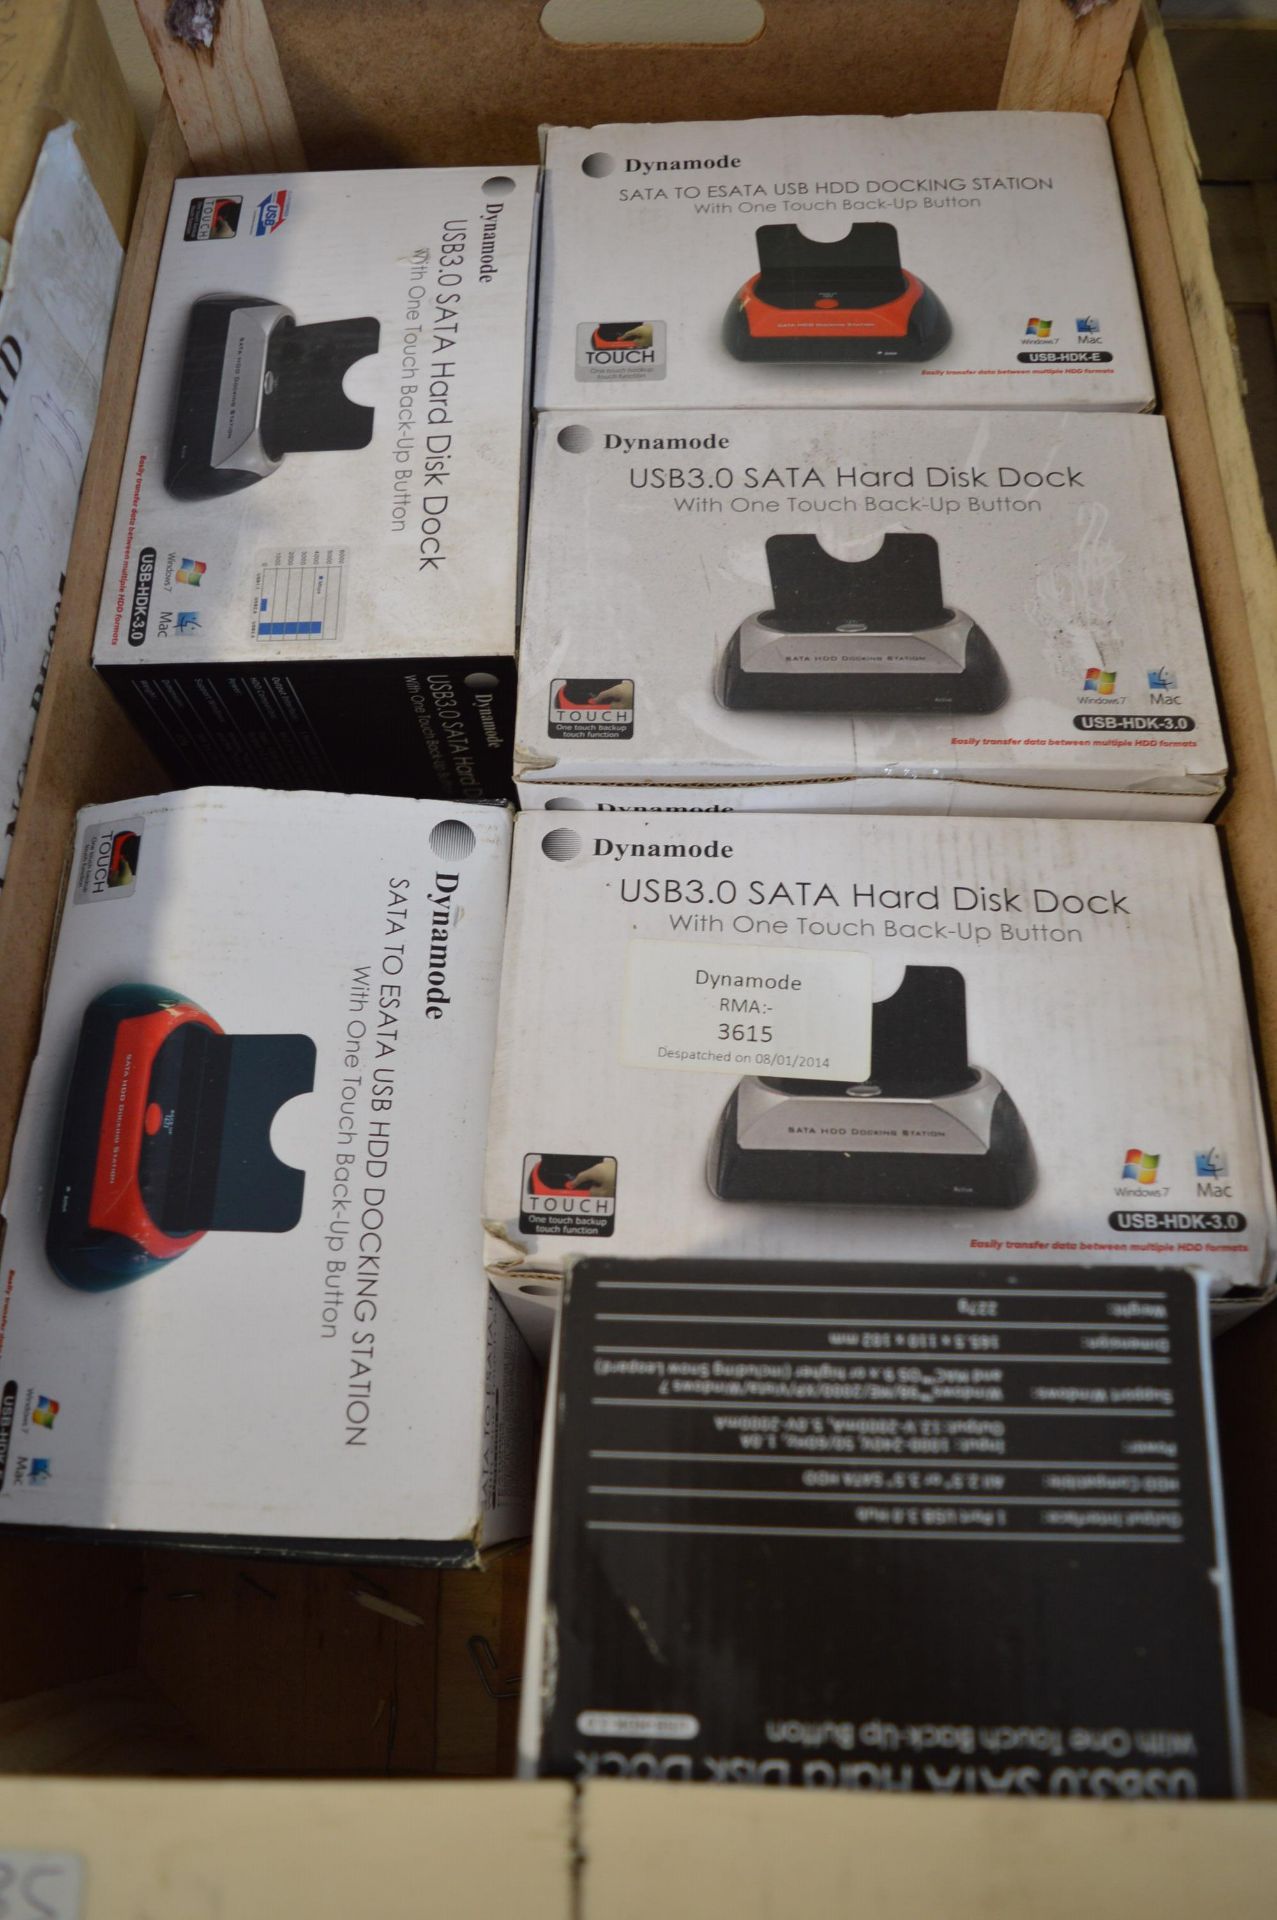 Six USB 3.0 SATA Hard Disc Docks